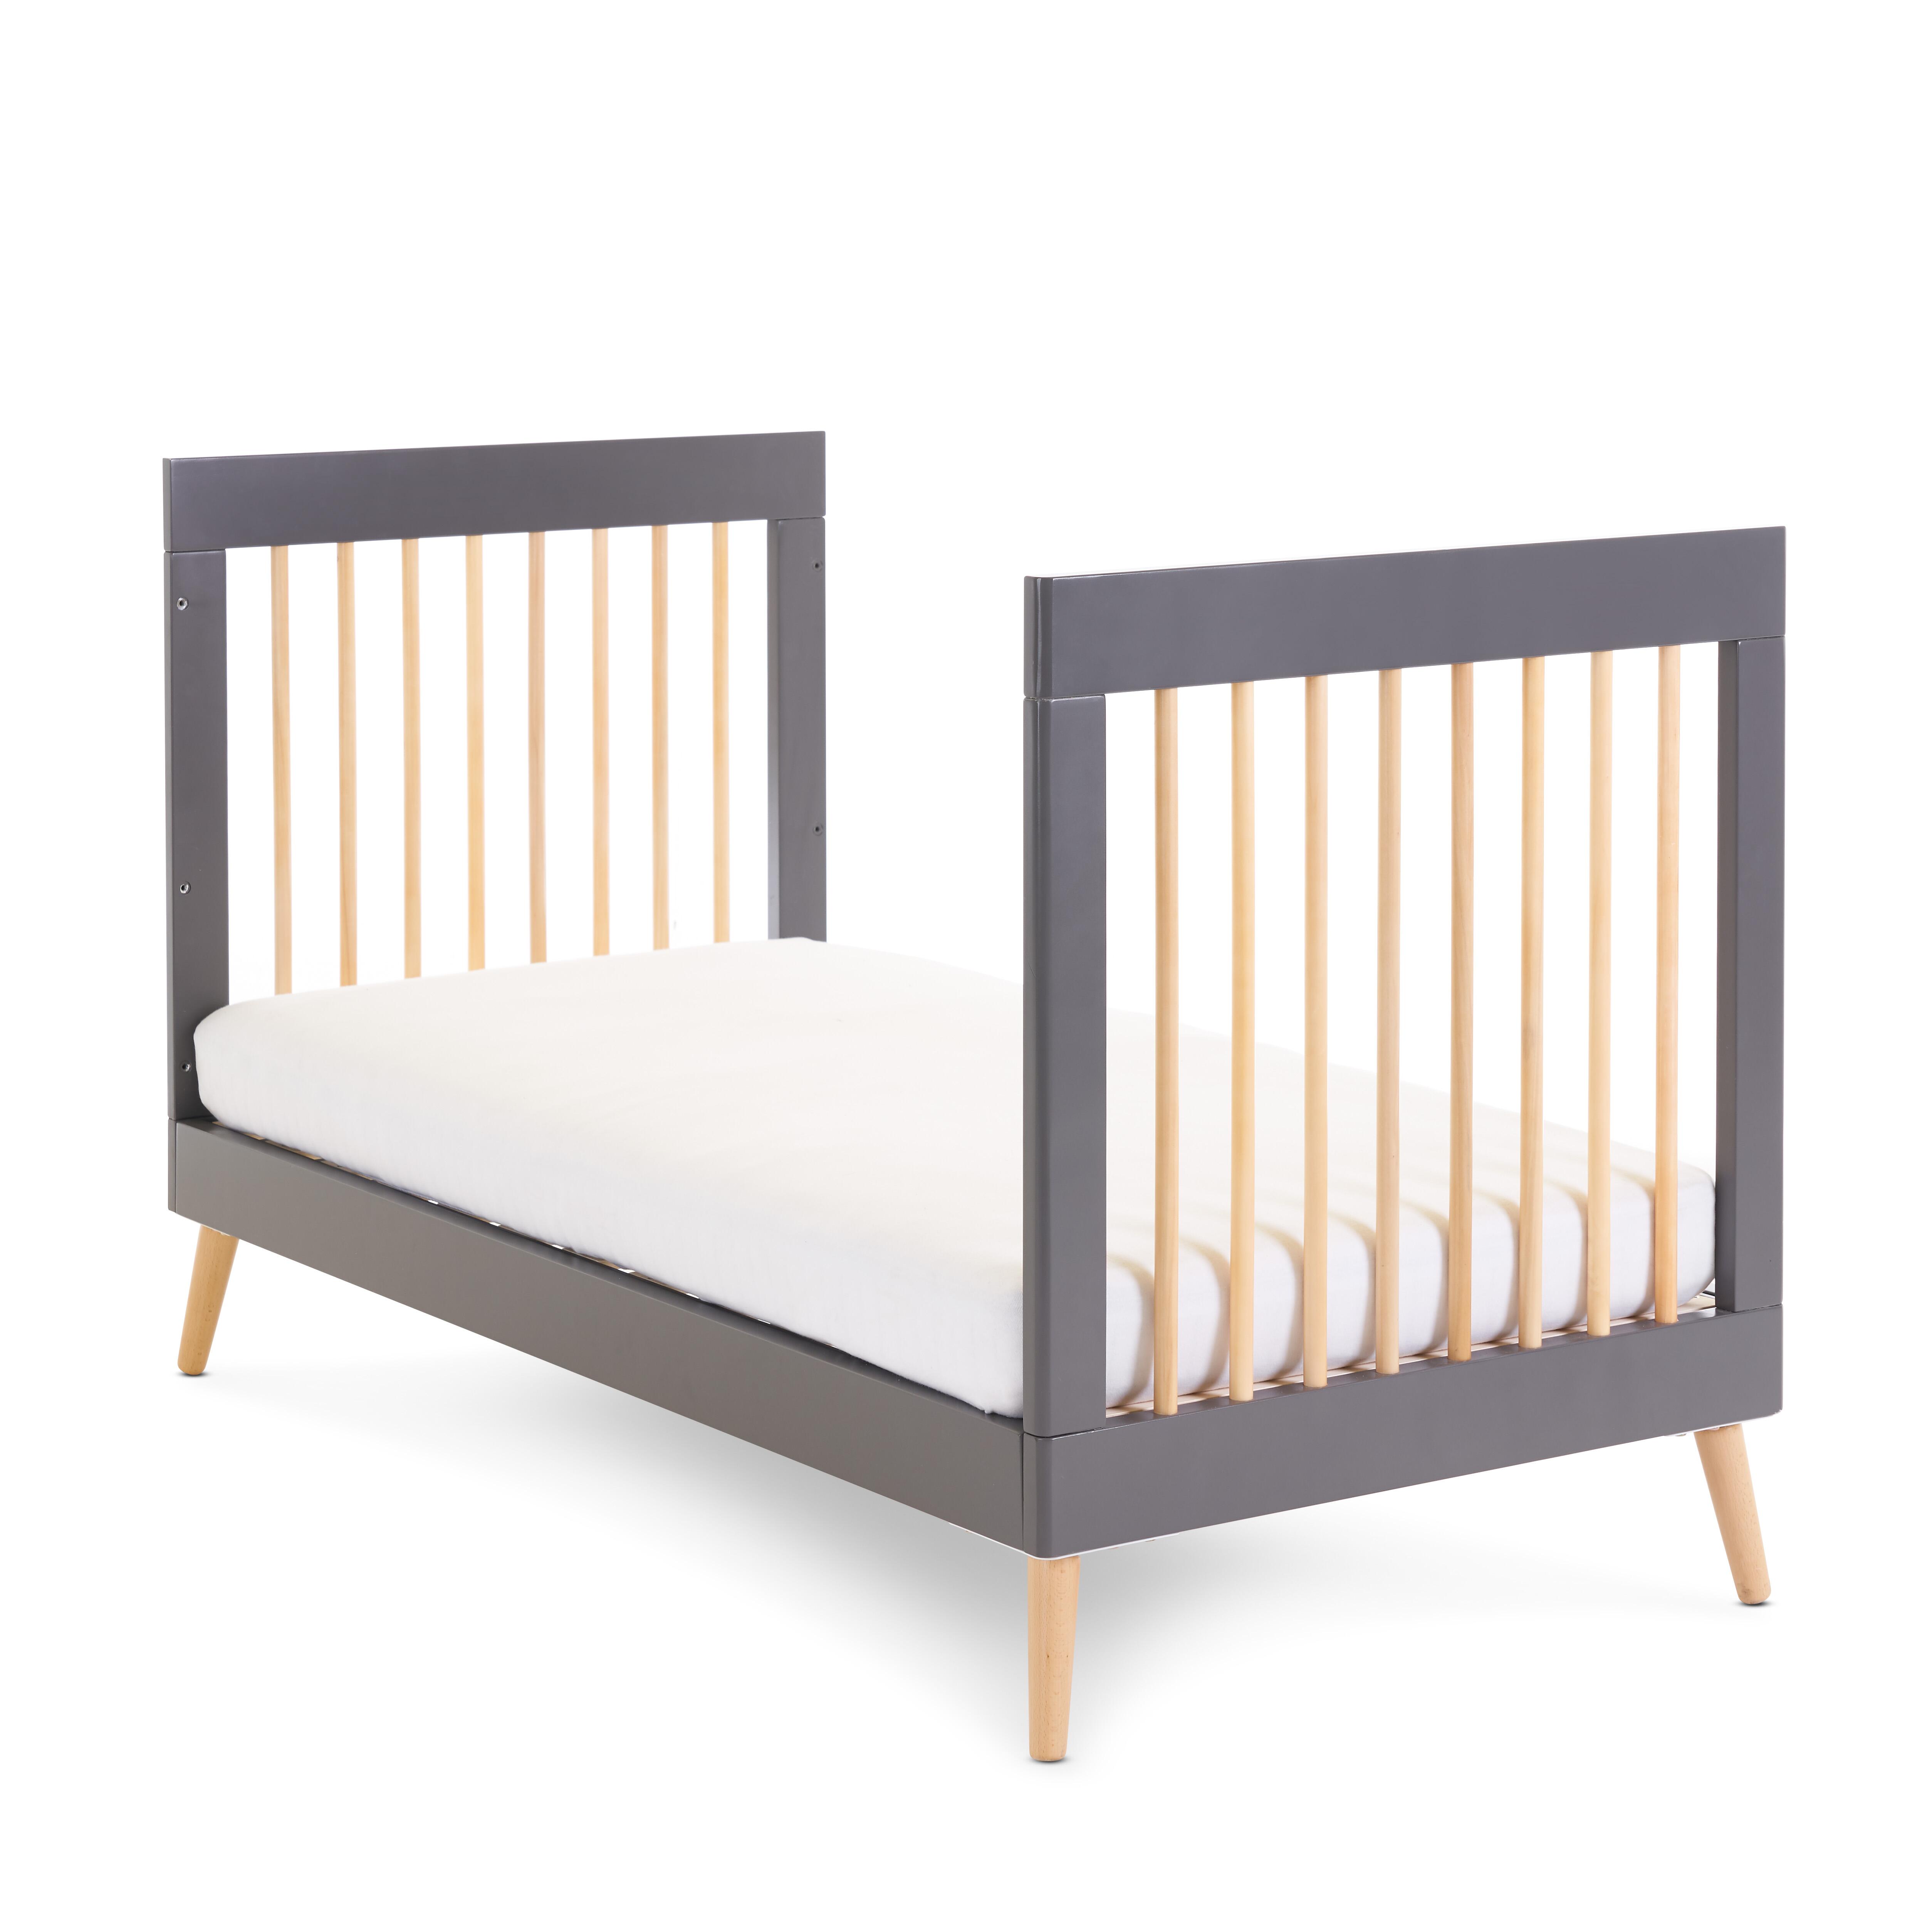 OBaby Scandi Style Cot Bed Maya - Slate toddler bed